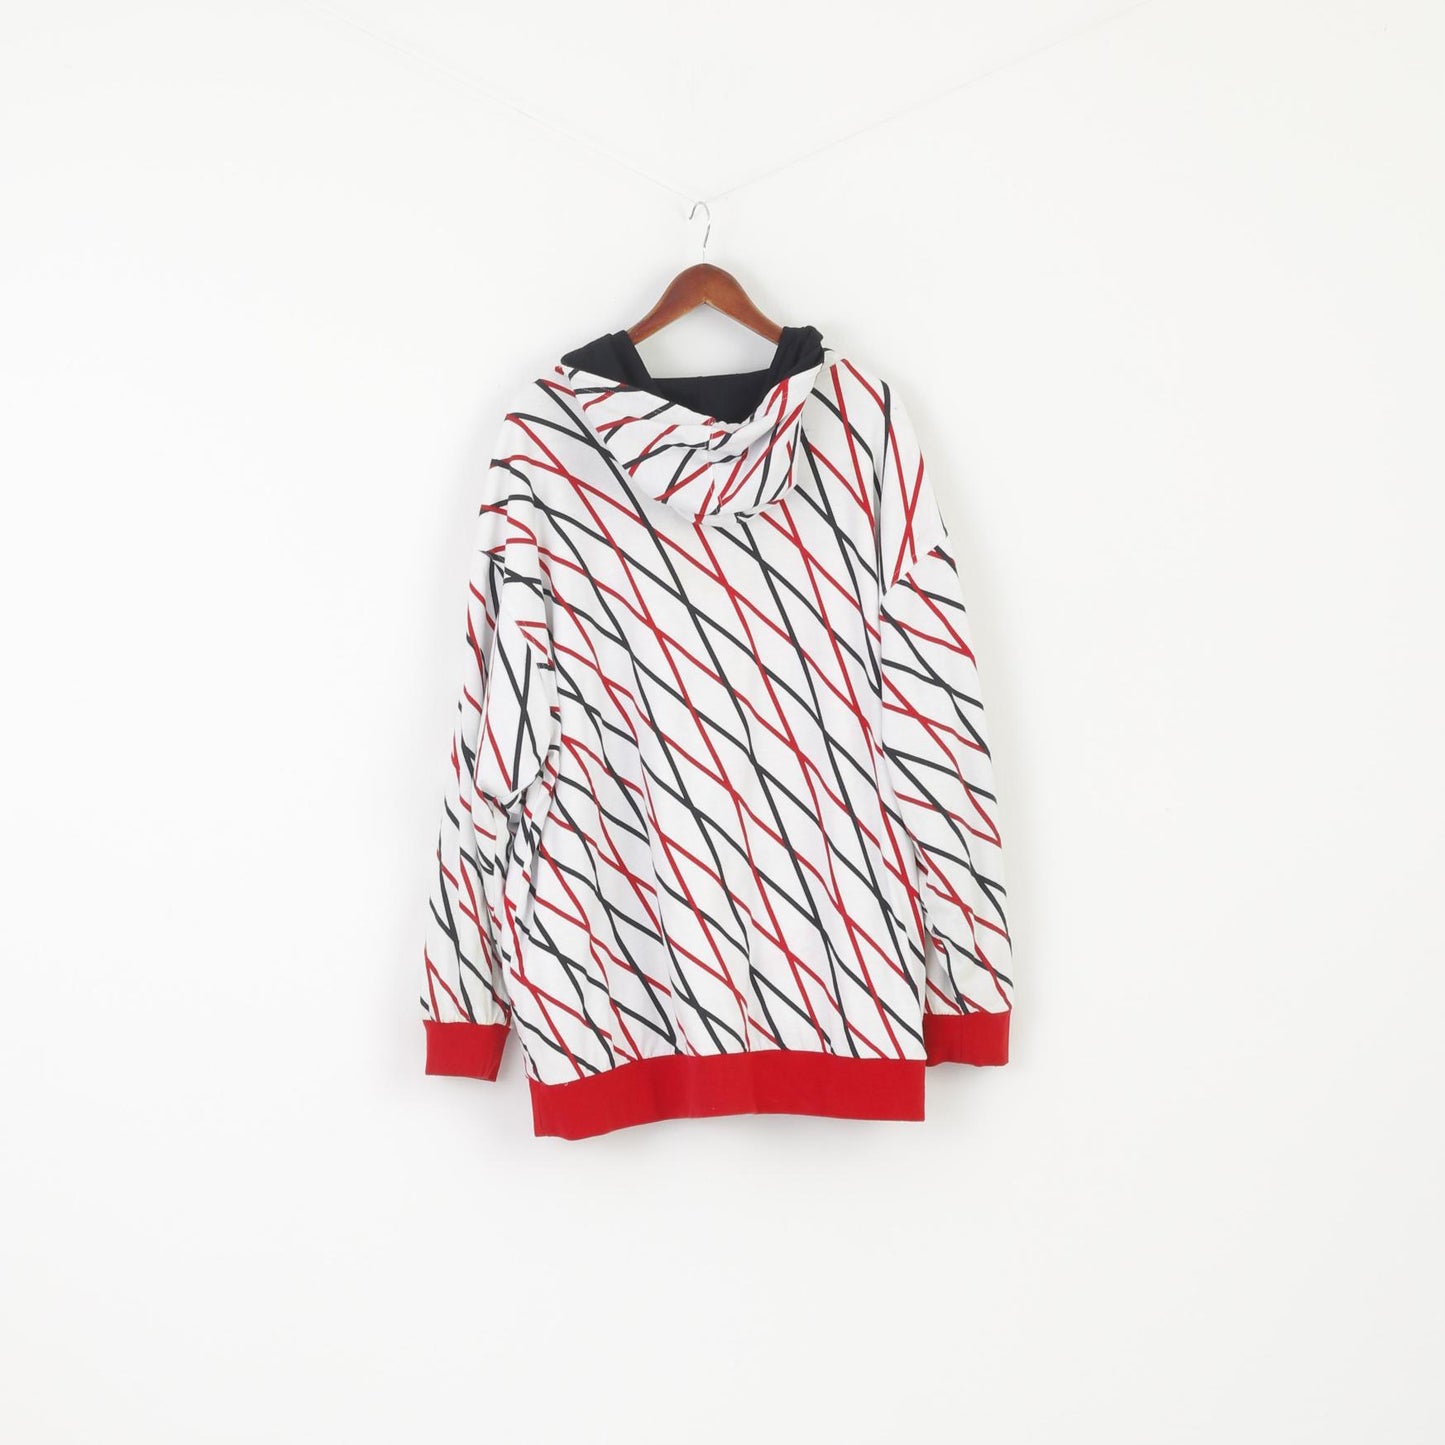 PJ Mark Men 2XL Sweatshirt Multicolour Printed Cotton Double Sided Zip Up Hoodie